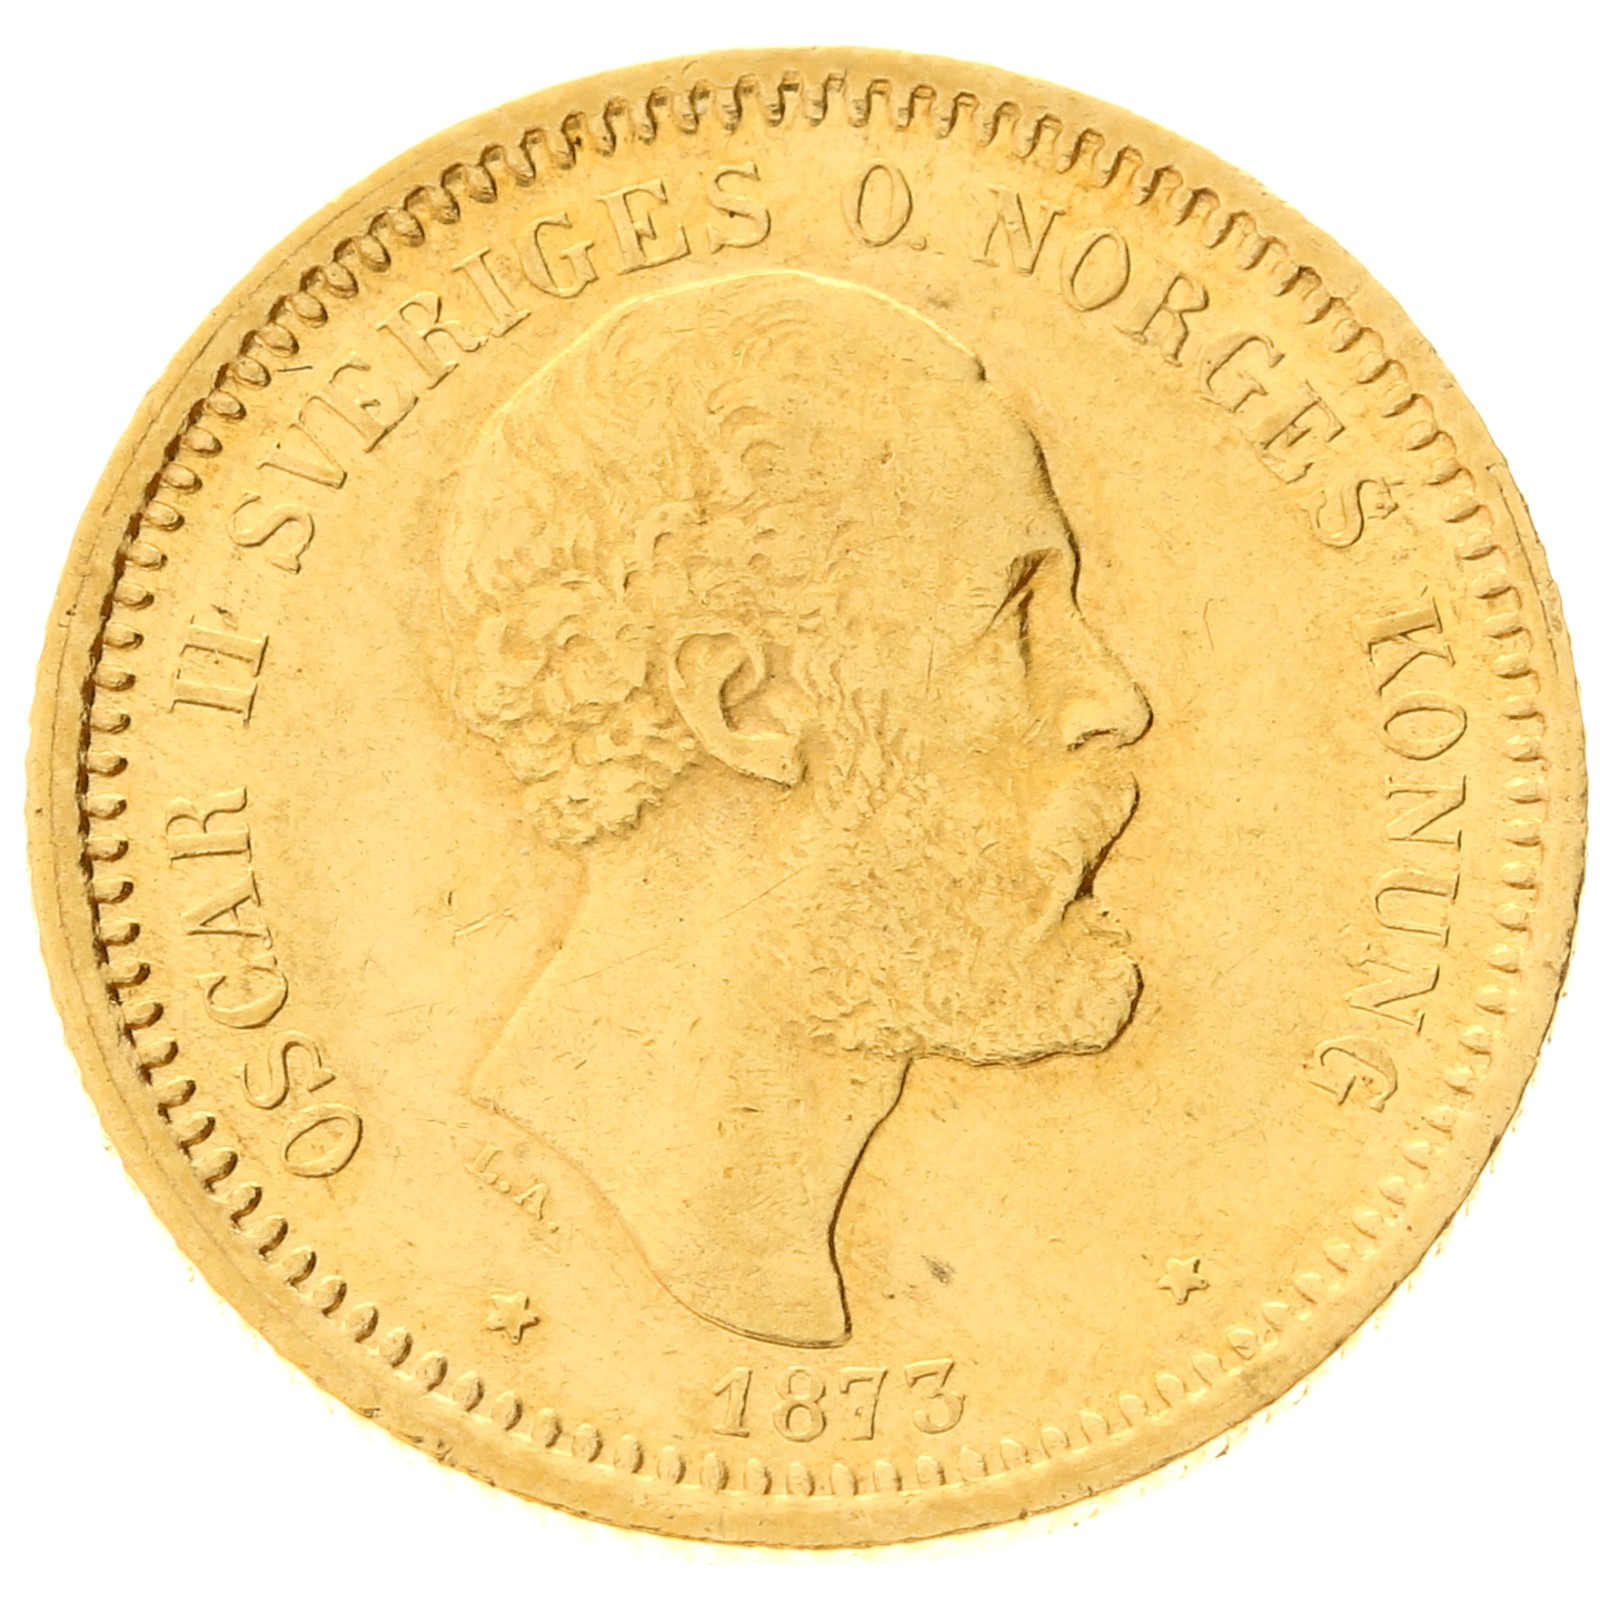 Sweden - 10 kroner - 1873 - Oscar II 